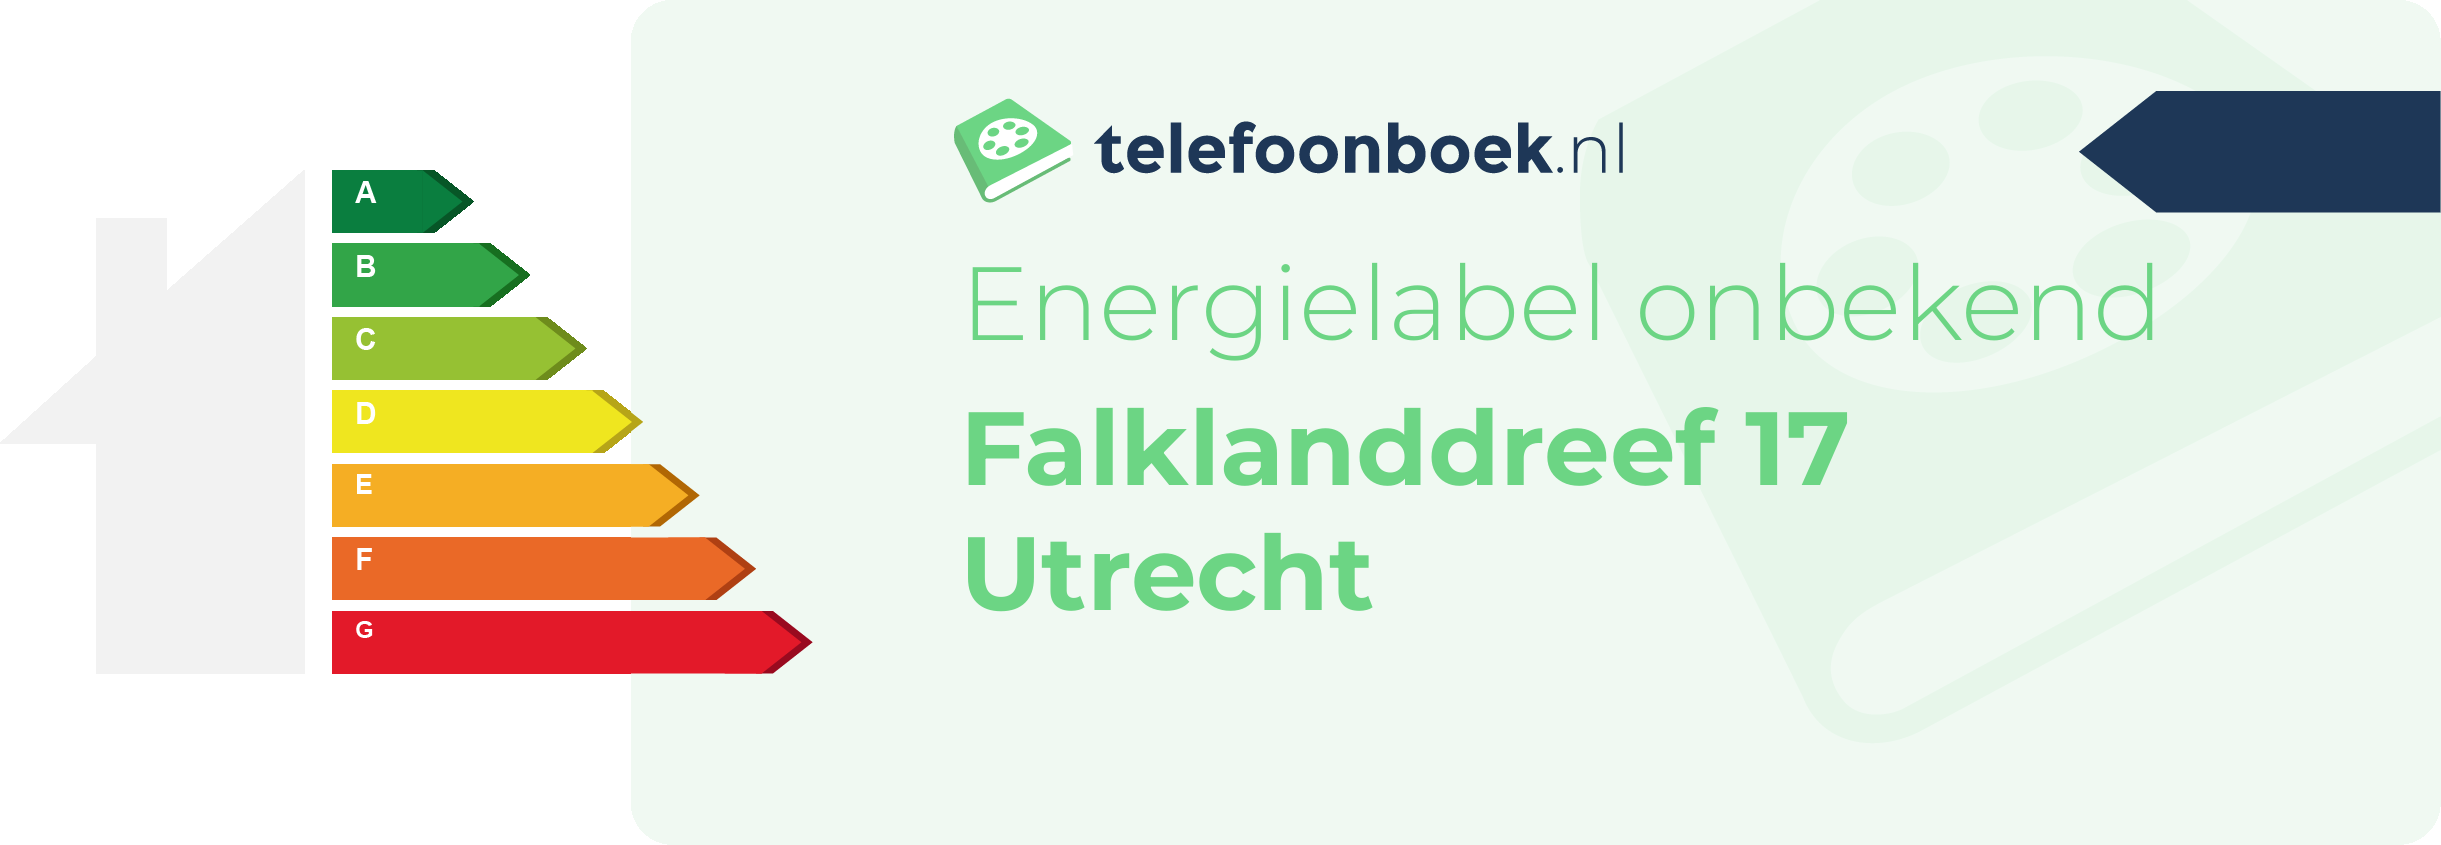 Energielabel Falklanddreef 17 Utrecht